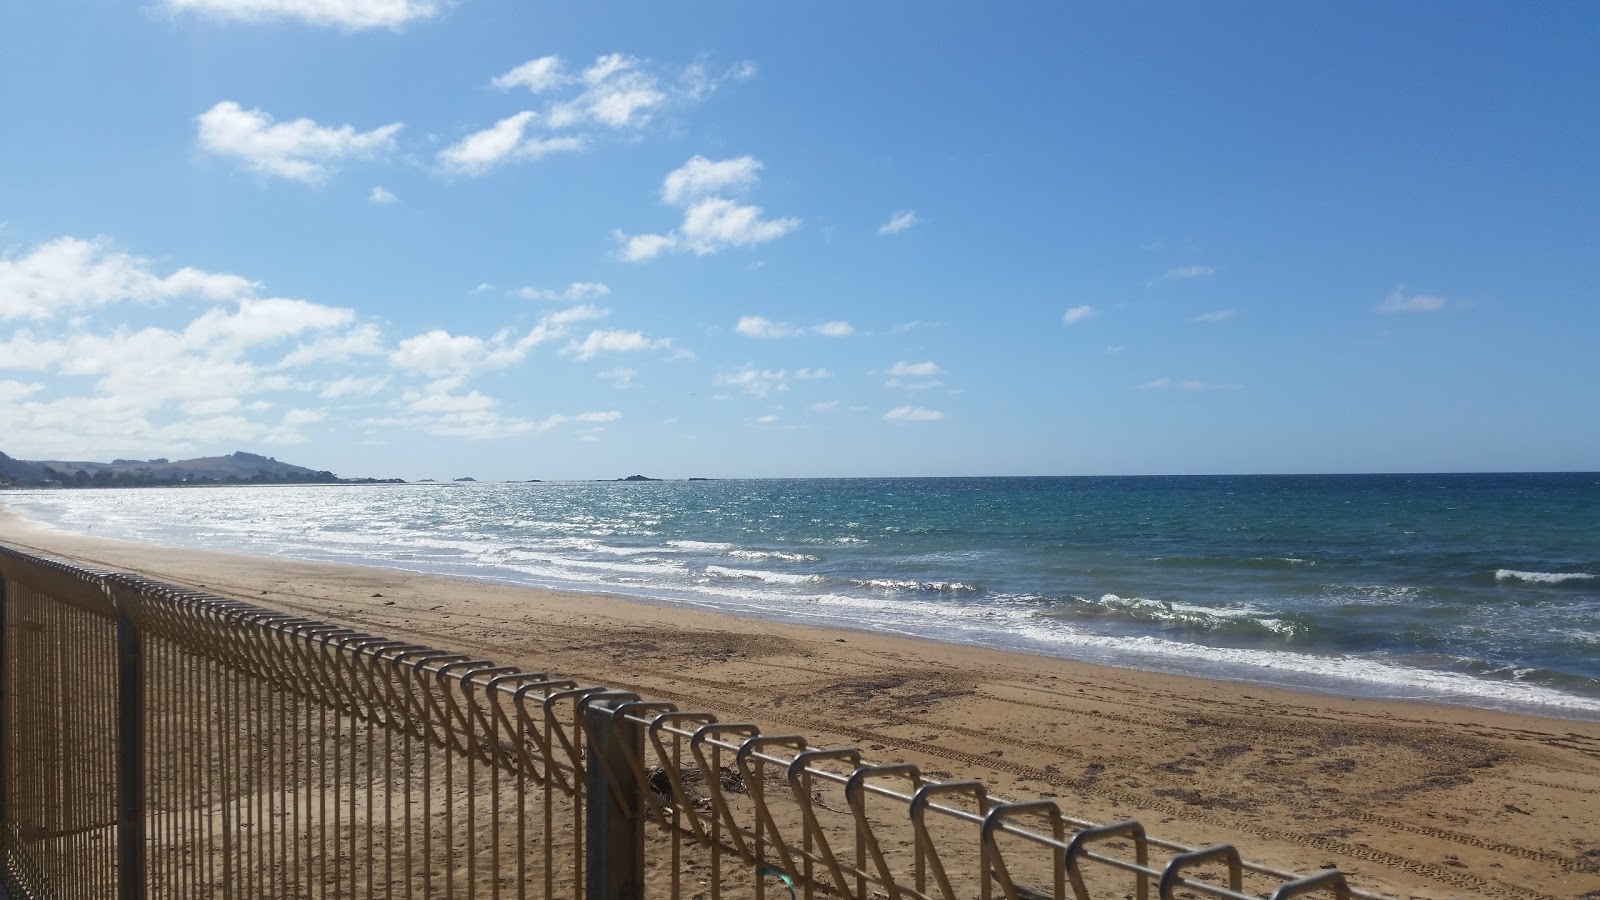 Foto de Buttons Beach - lugar popular entre os apreciadores de relaxamento